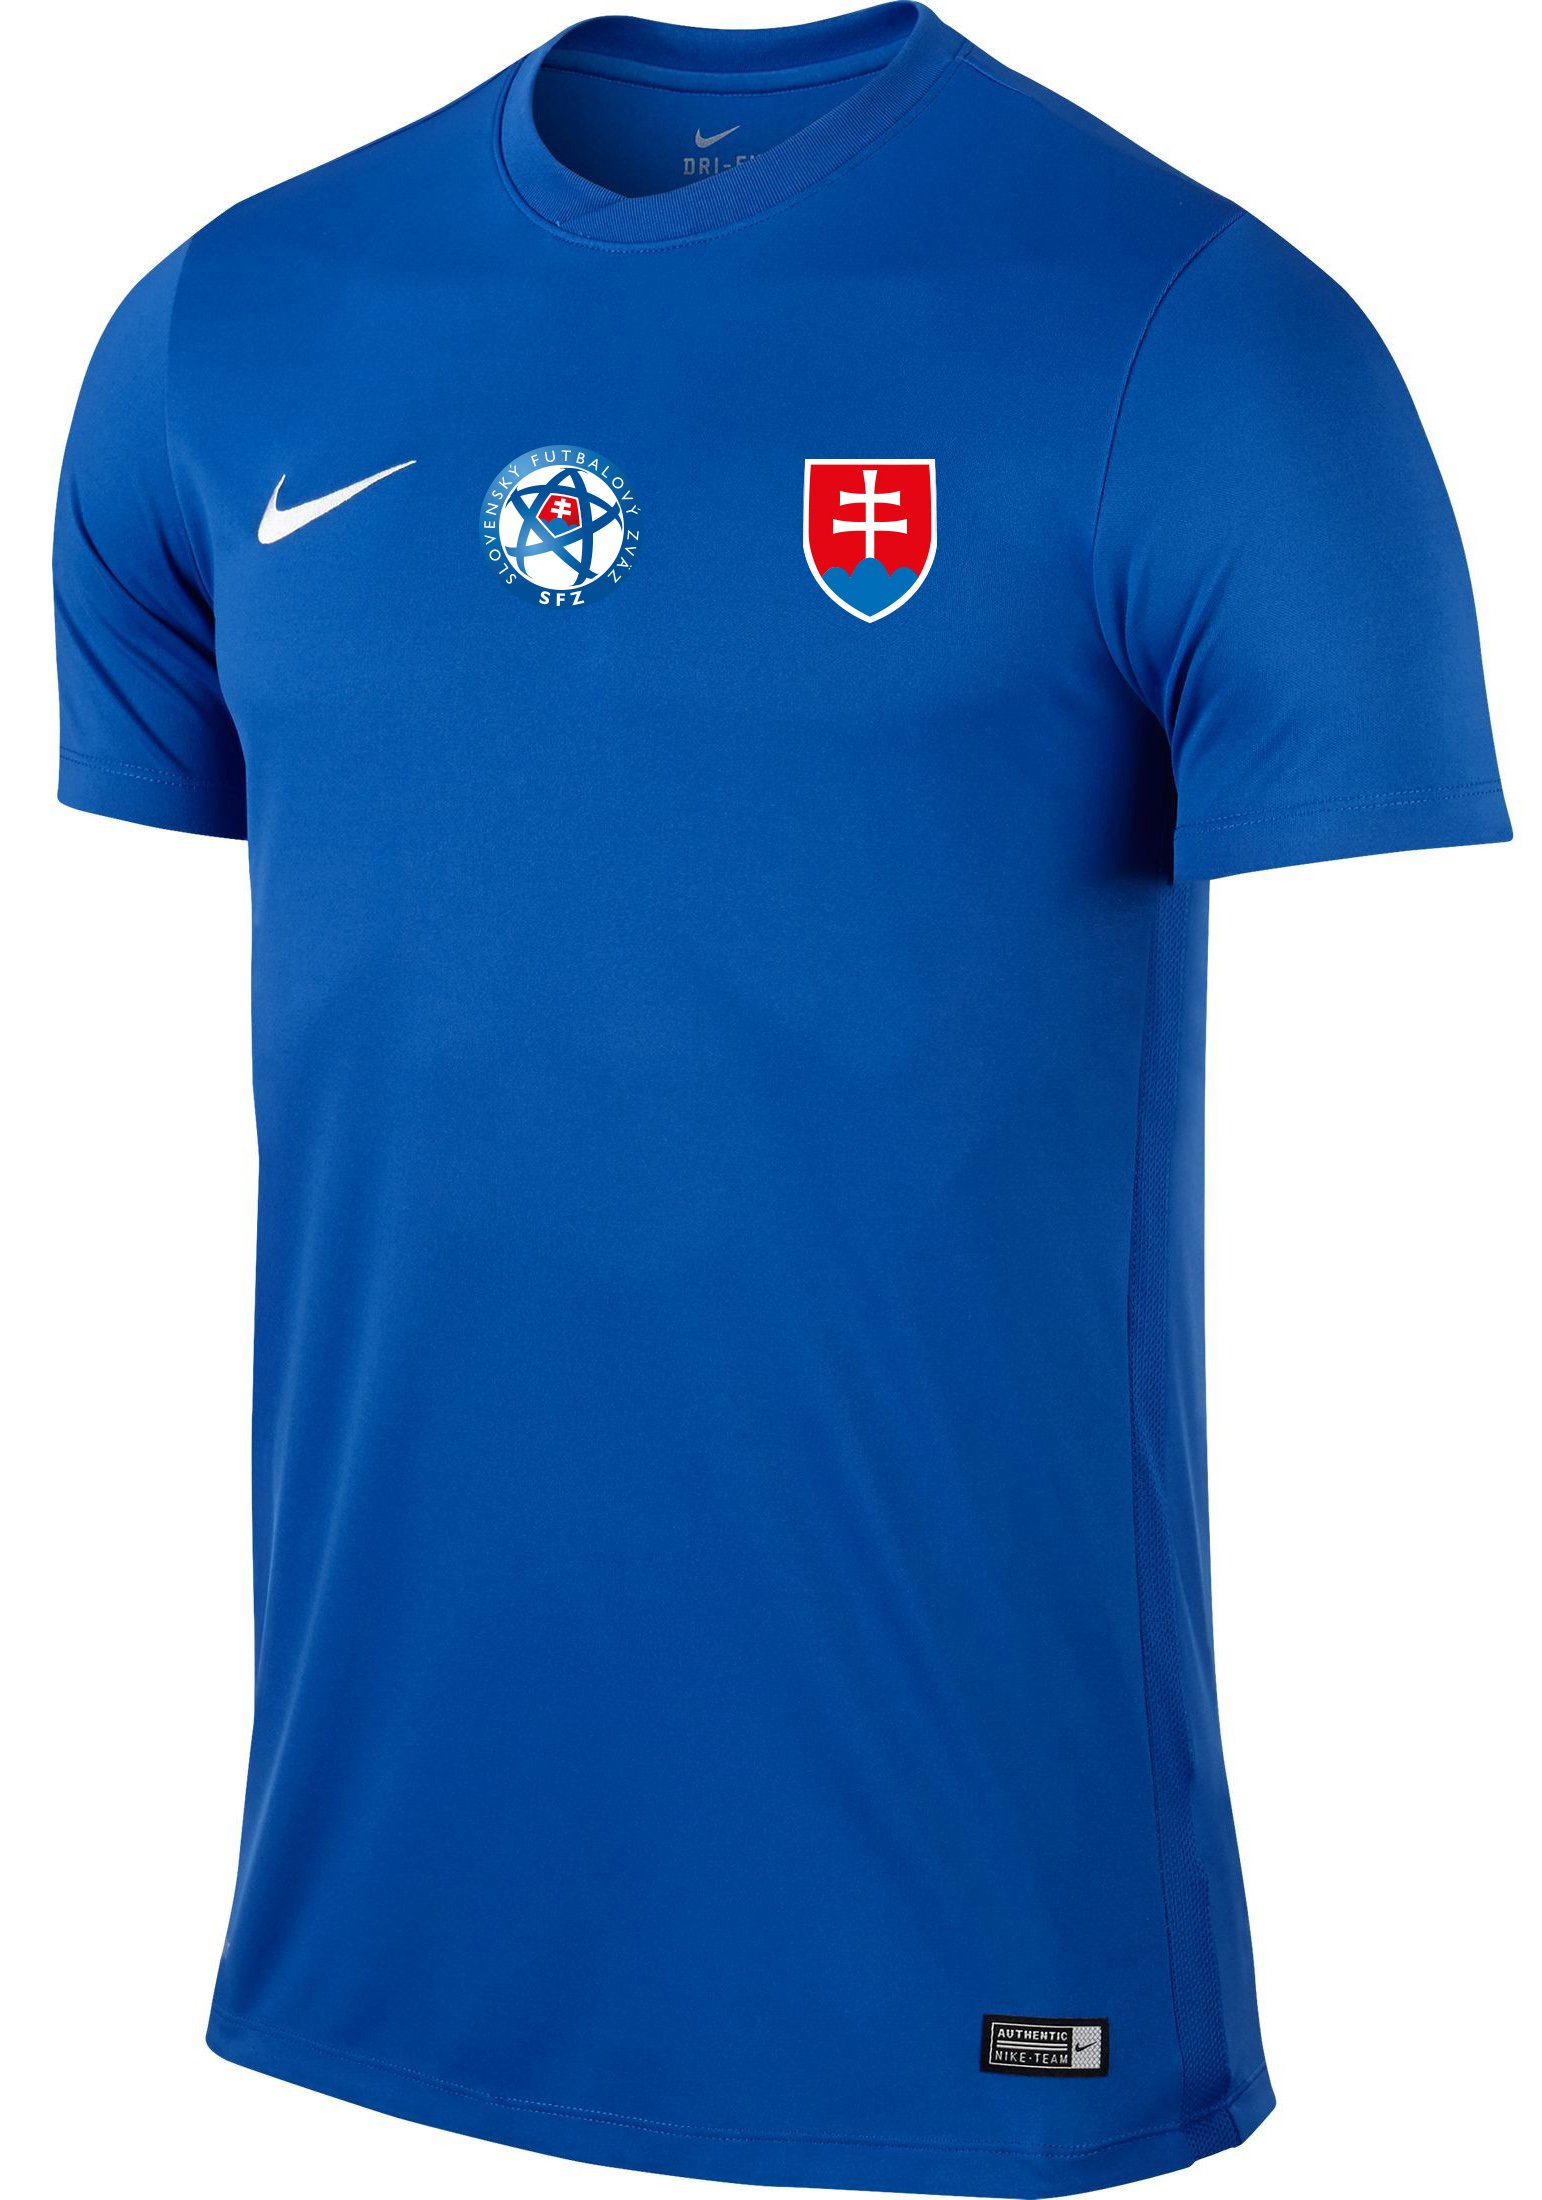 Maglia Nike Slovakia Replica Away Football Jersey 2016/2017